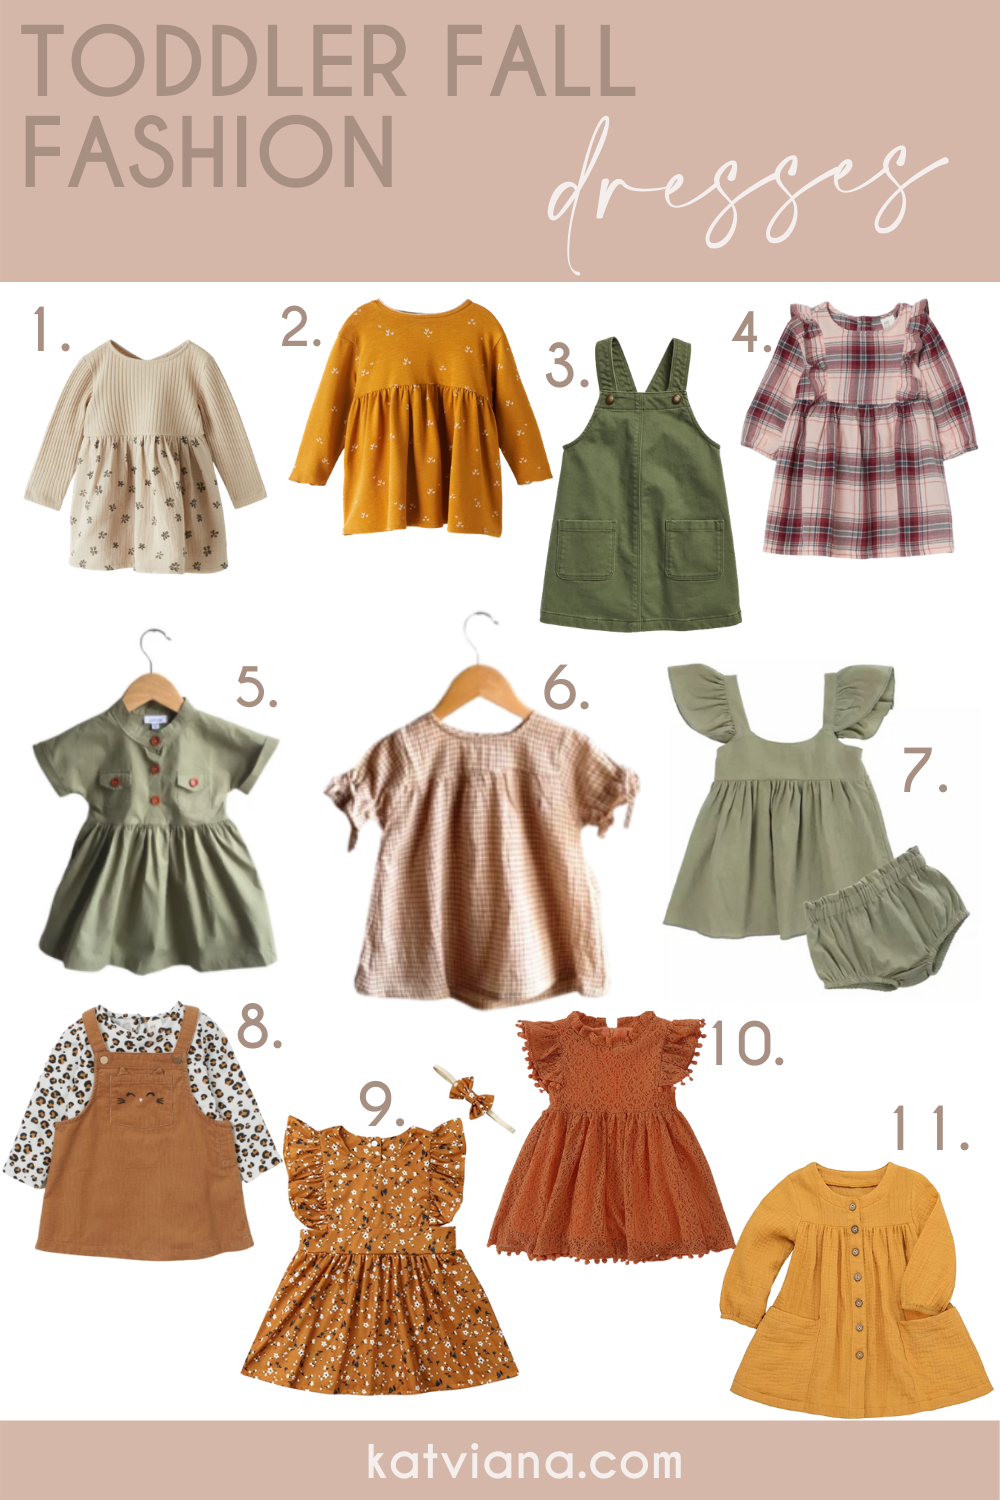 Trendy Toddler Fall Fashion: Dresses | Kat Viana